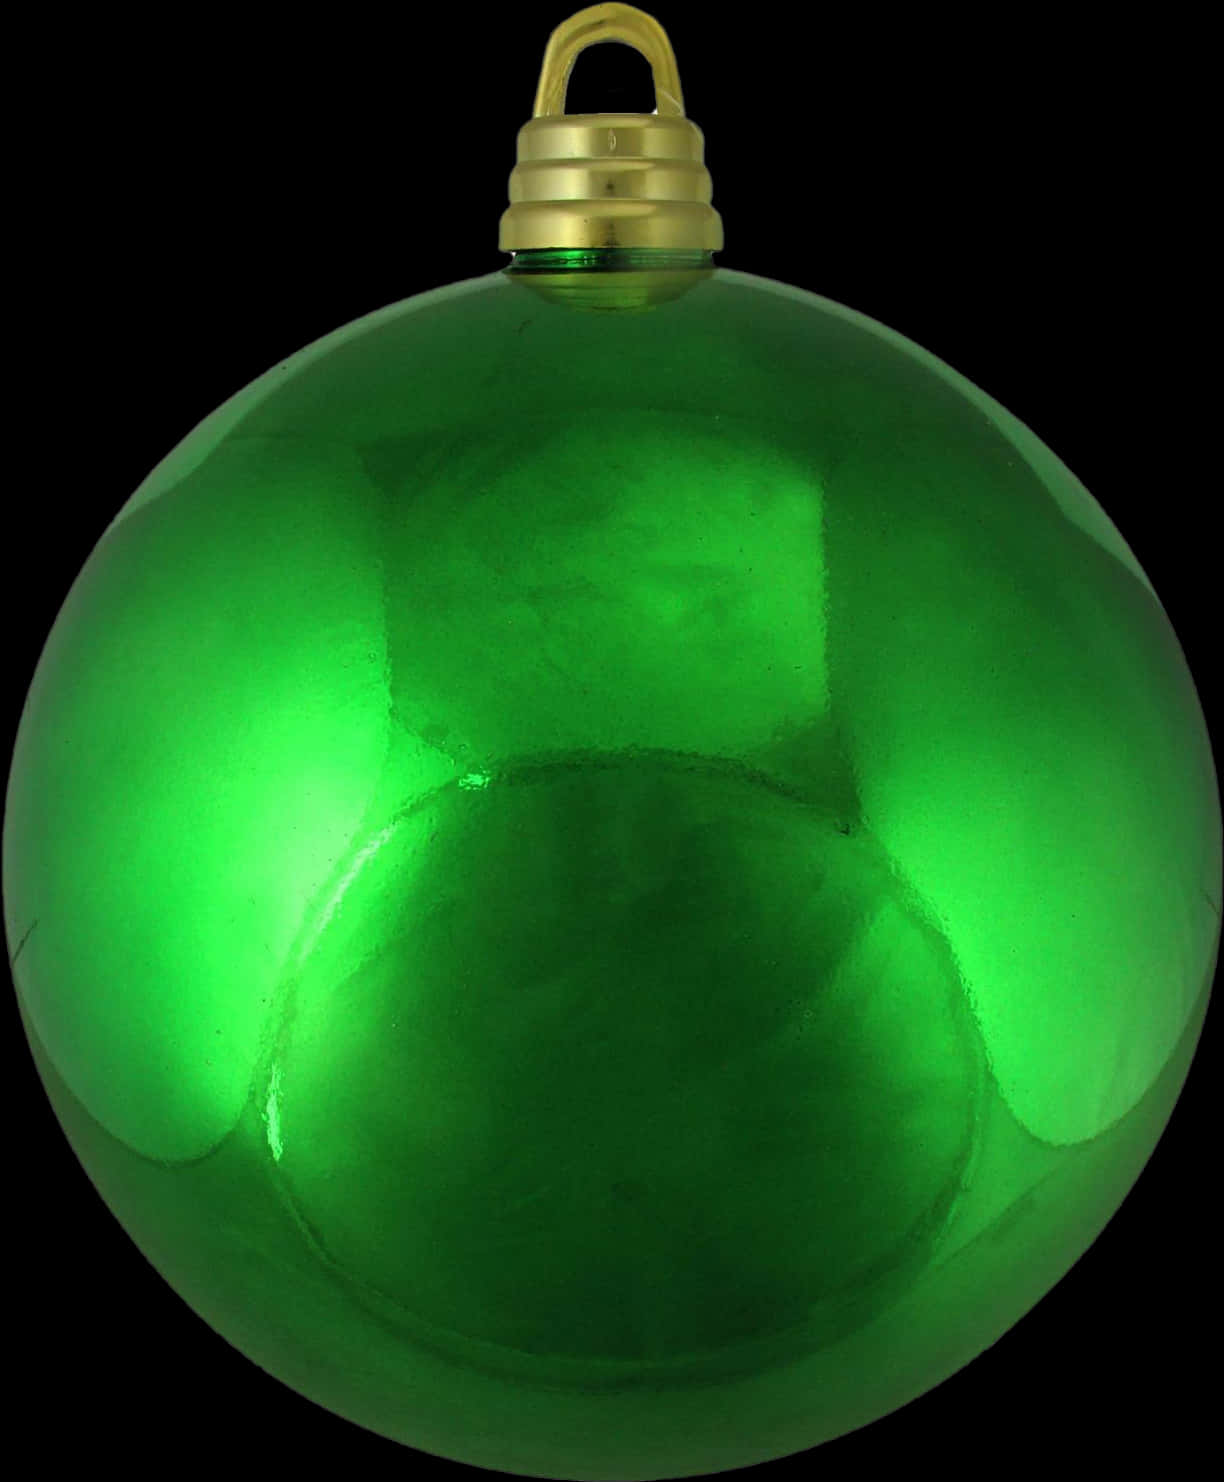 Green Christmas Ornamenton Black